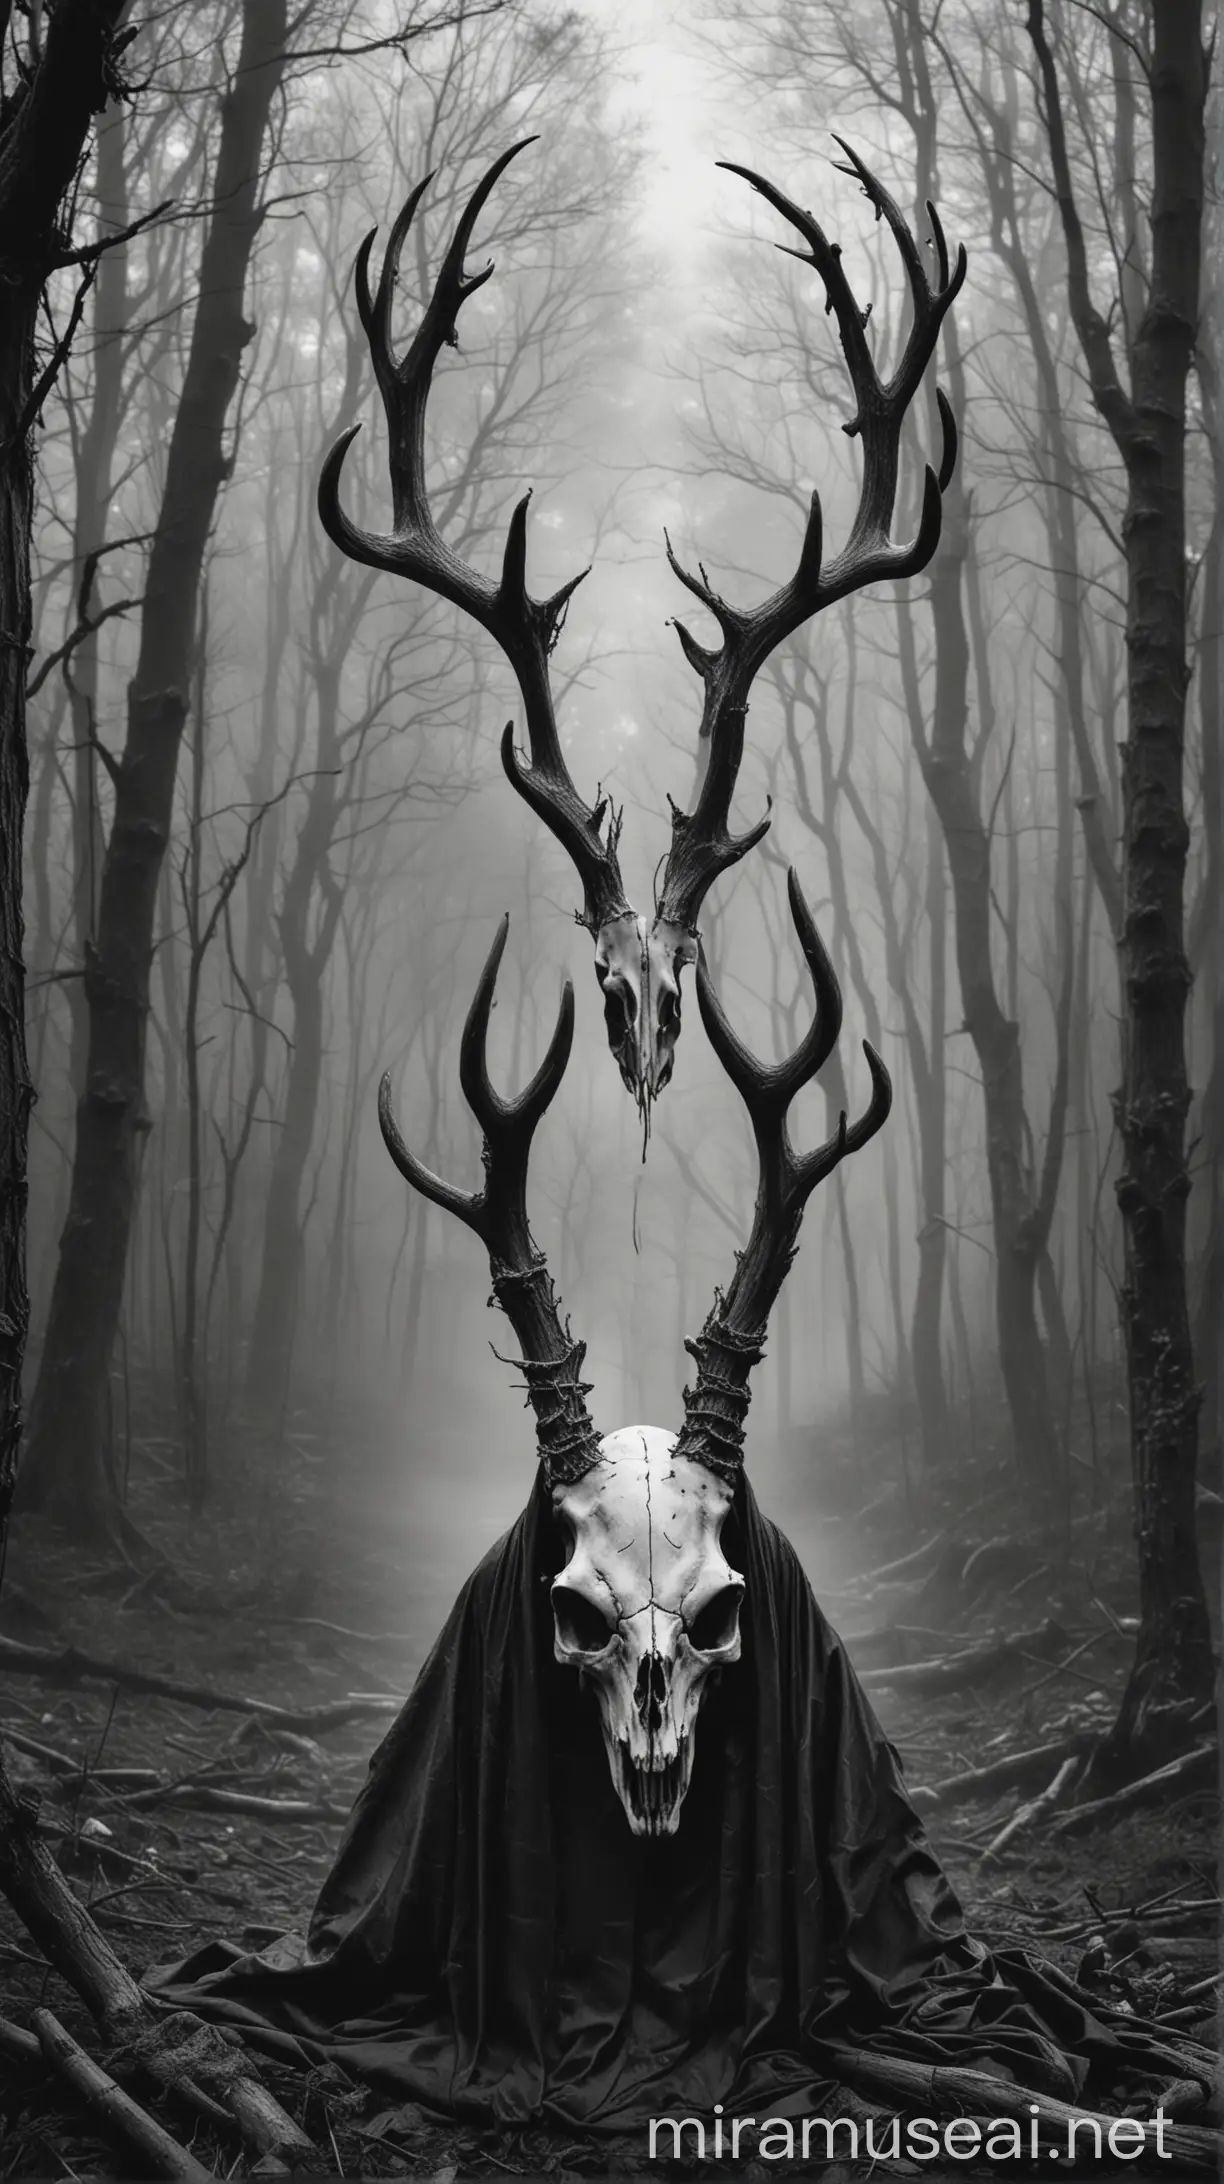 Eerie Deer Skull Death Portrait in Misty Forest